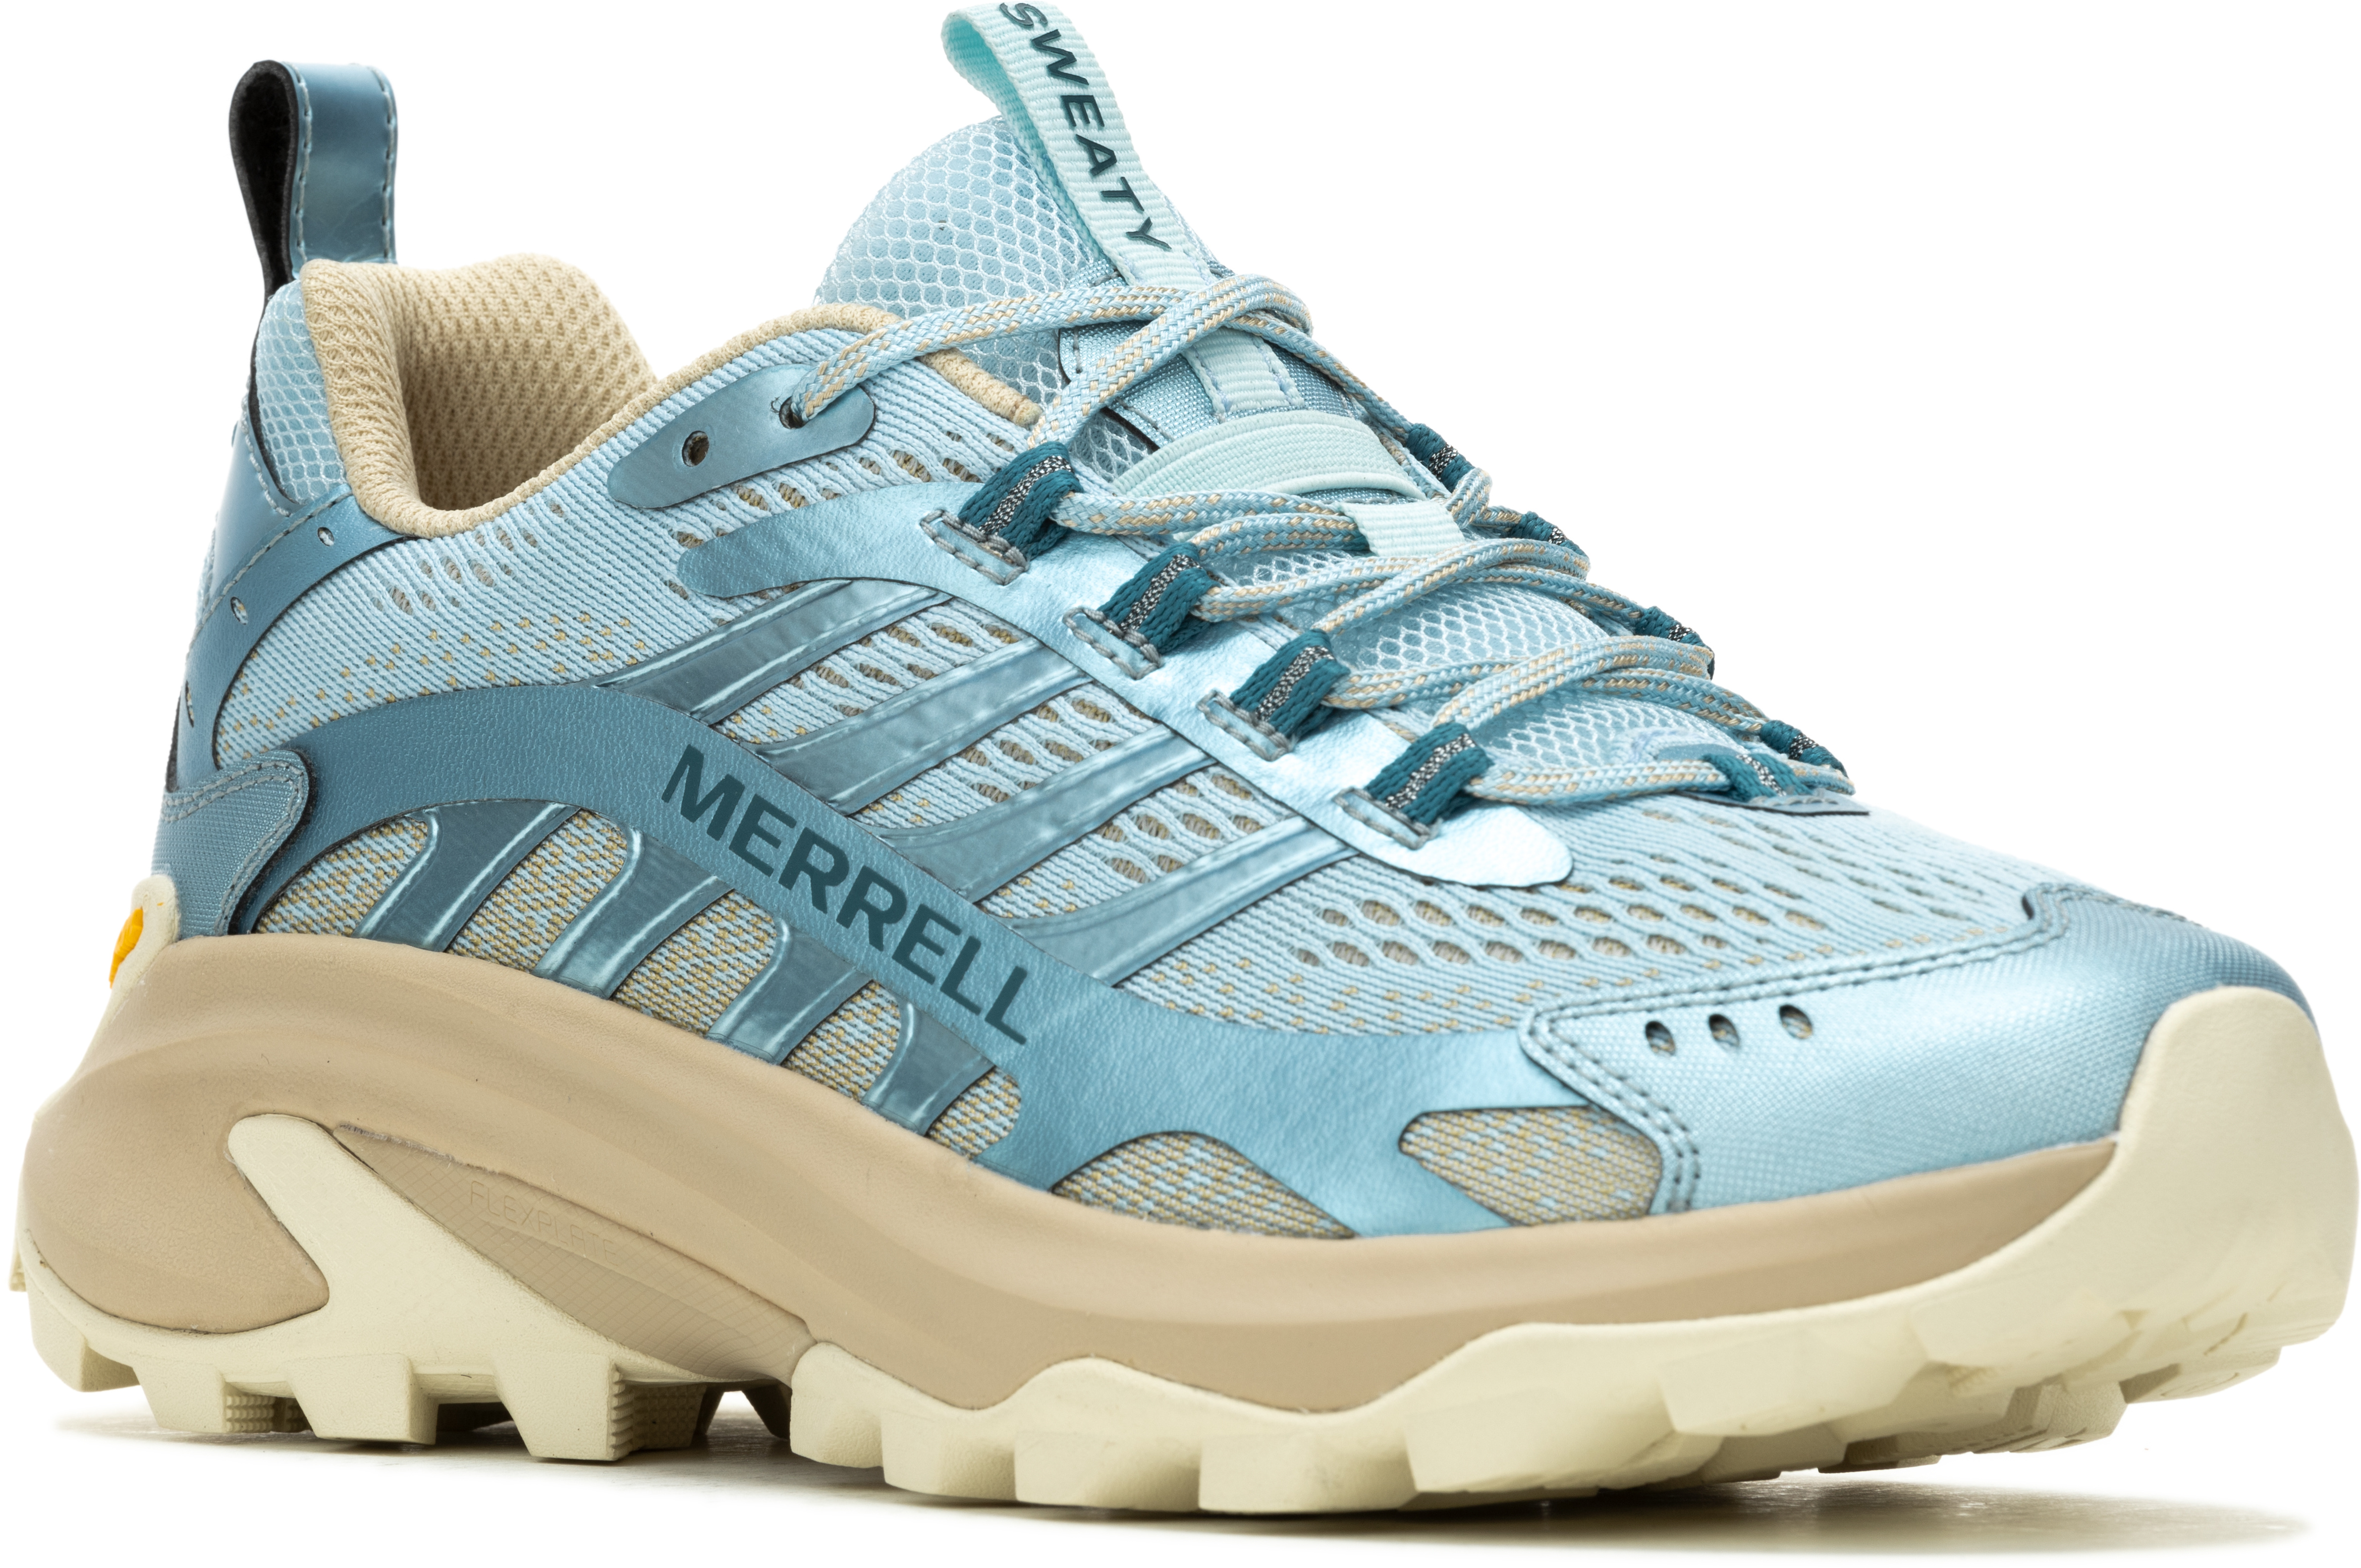 Туристические ботинки Moab Speed 2 от Merrell для женщин Merrell